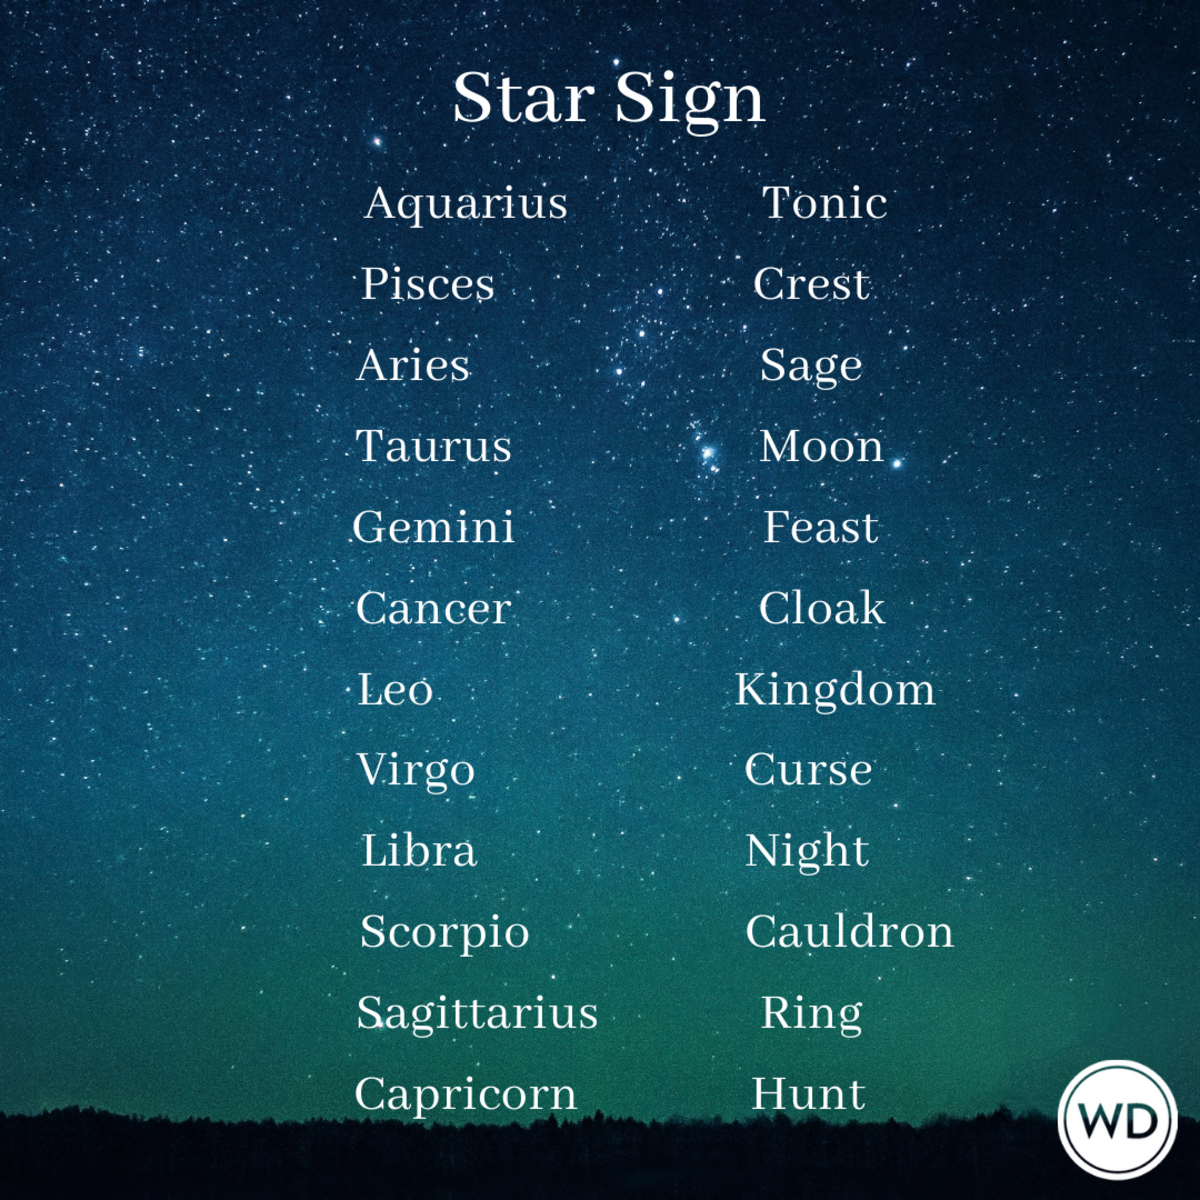 Star Sign title generator